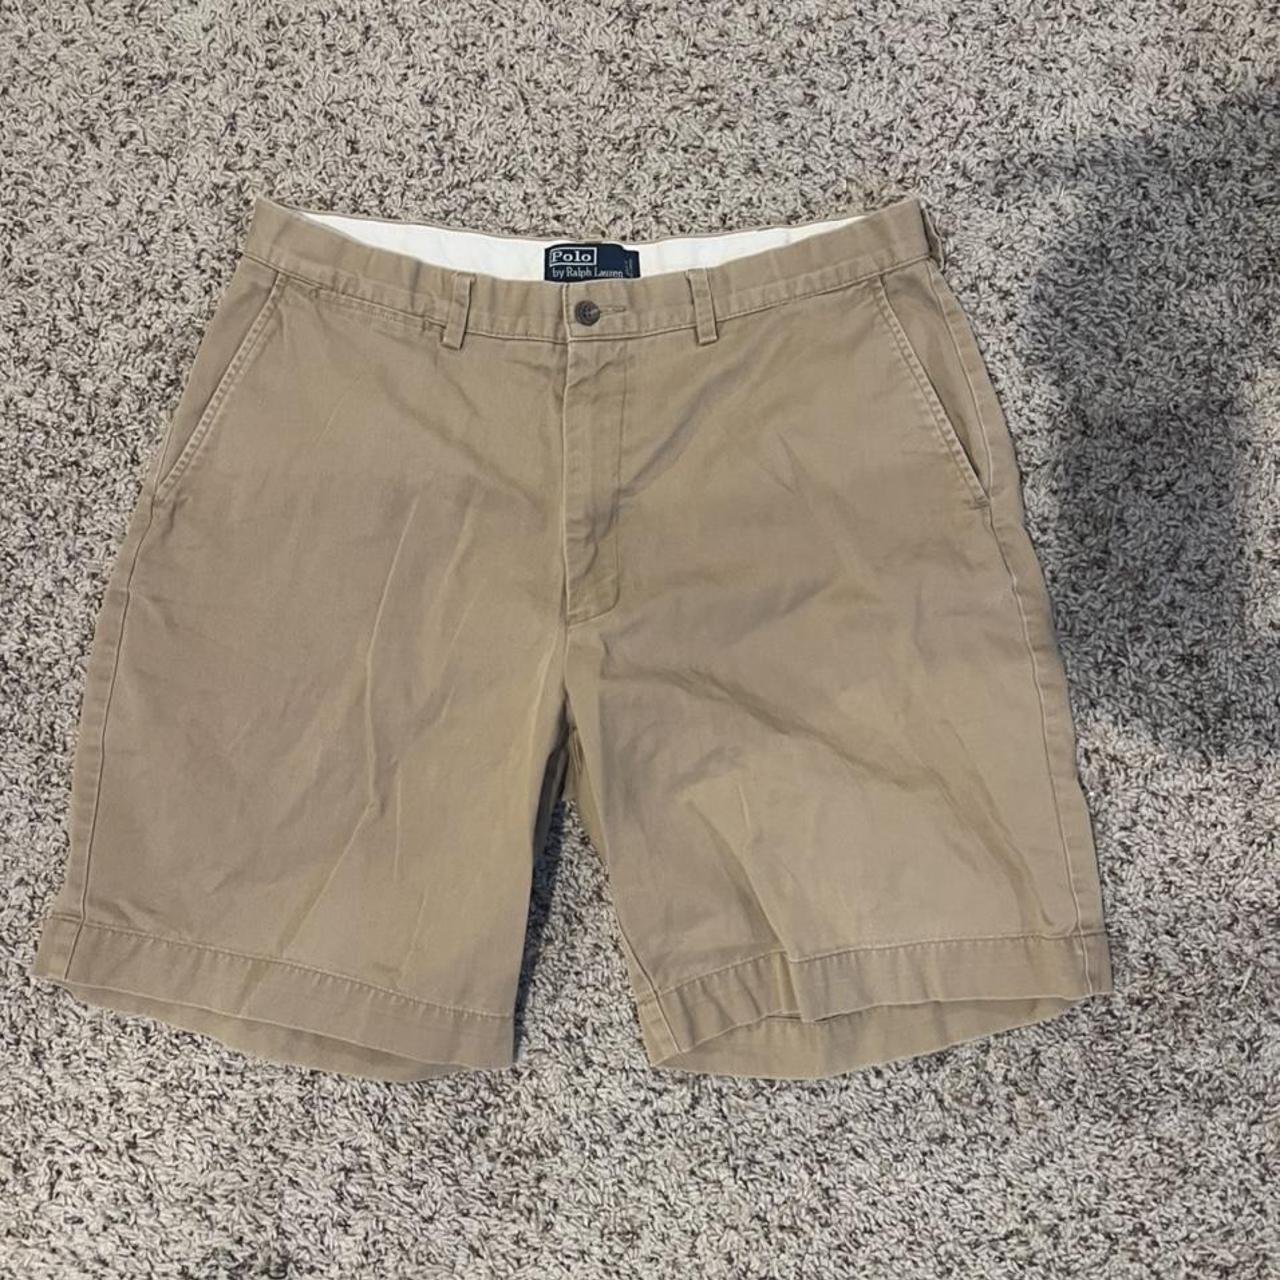 Polo Ralph Lauren Khaki Shorts - Size 36 - 9” inseam - Depop